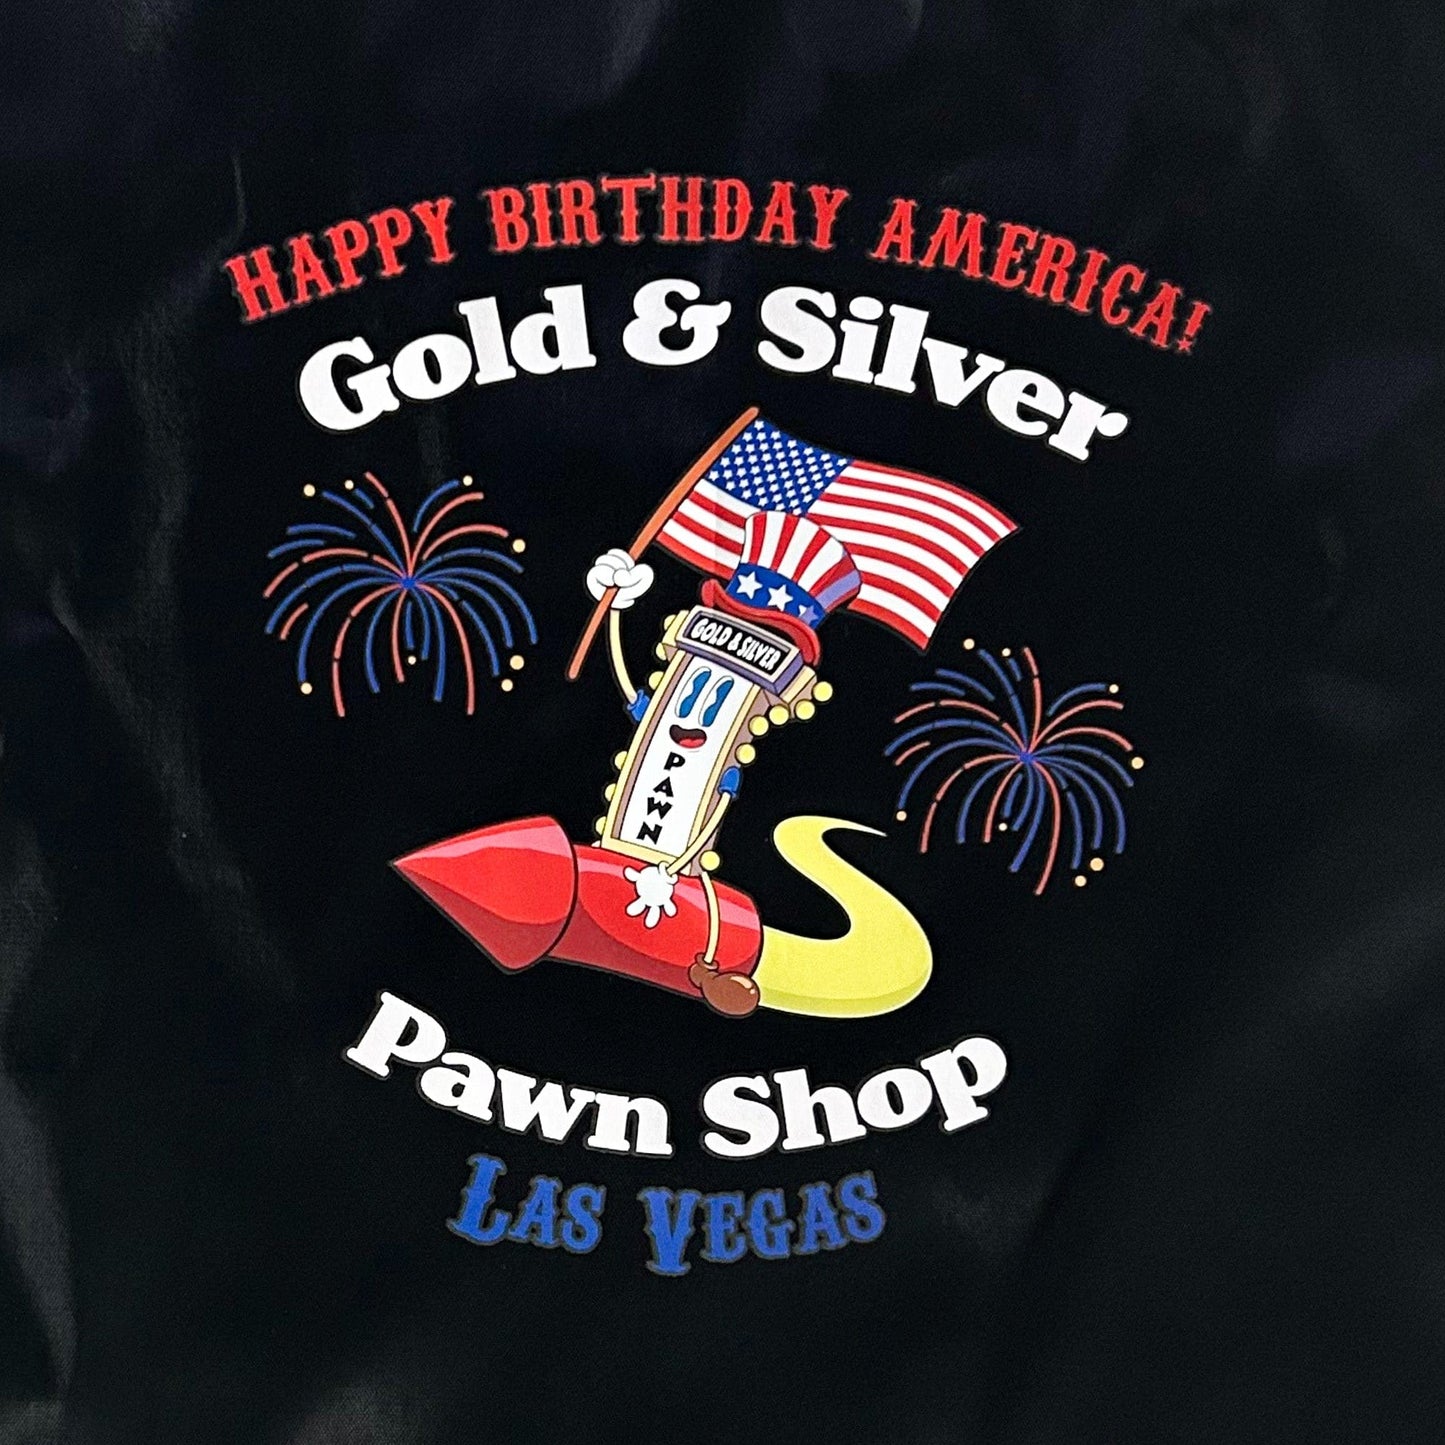 Gold & Silver Pawn Shop 4th of July Drawstring Bag Close View